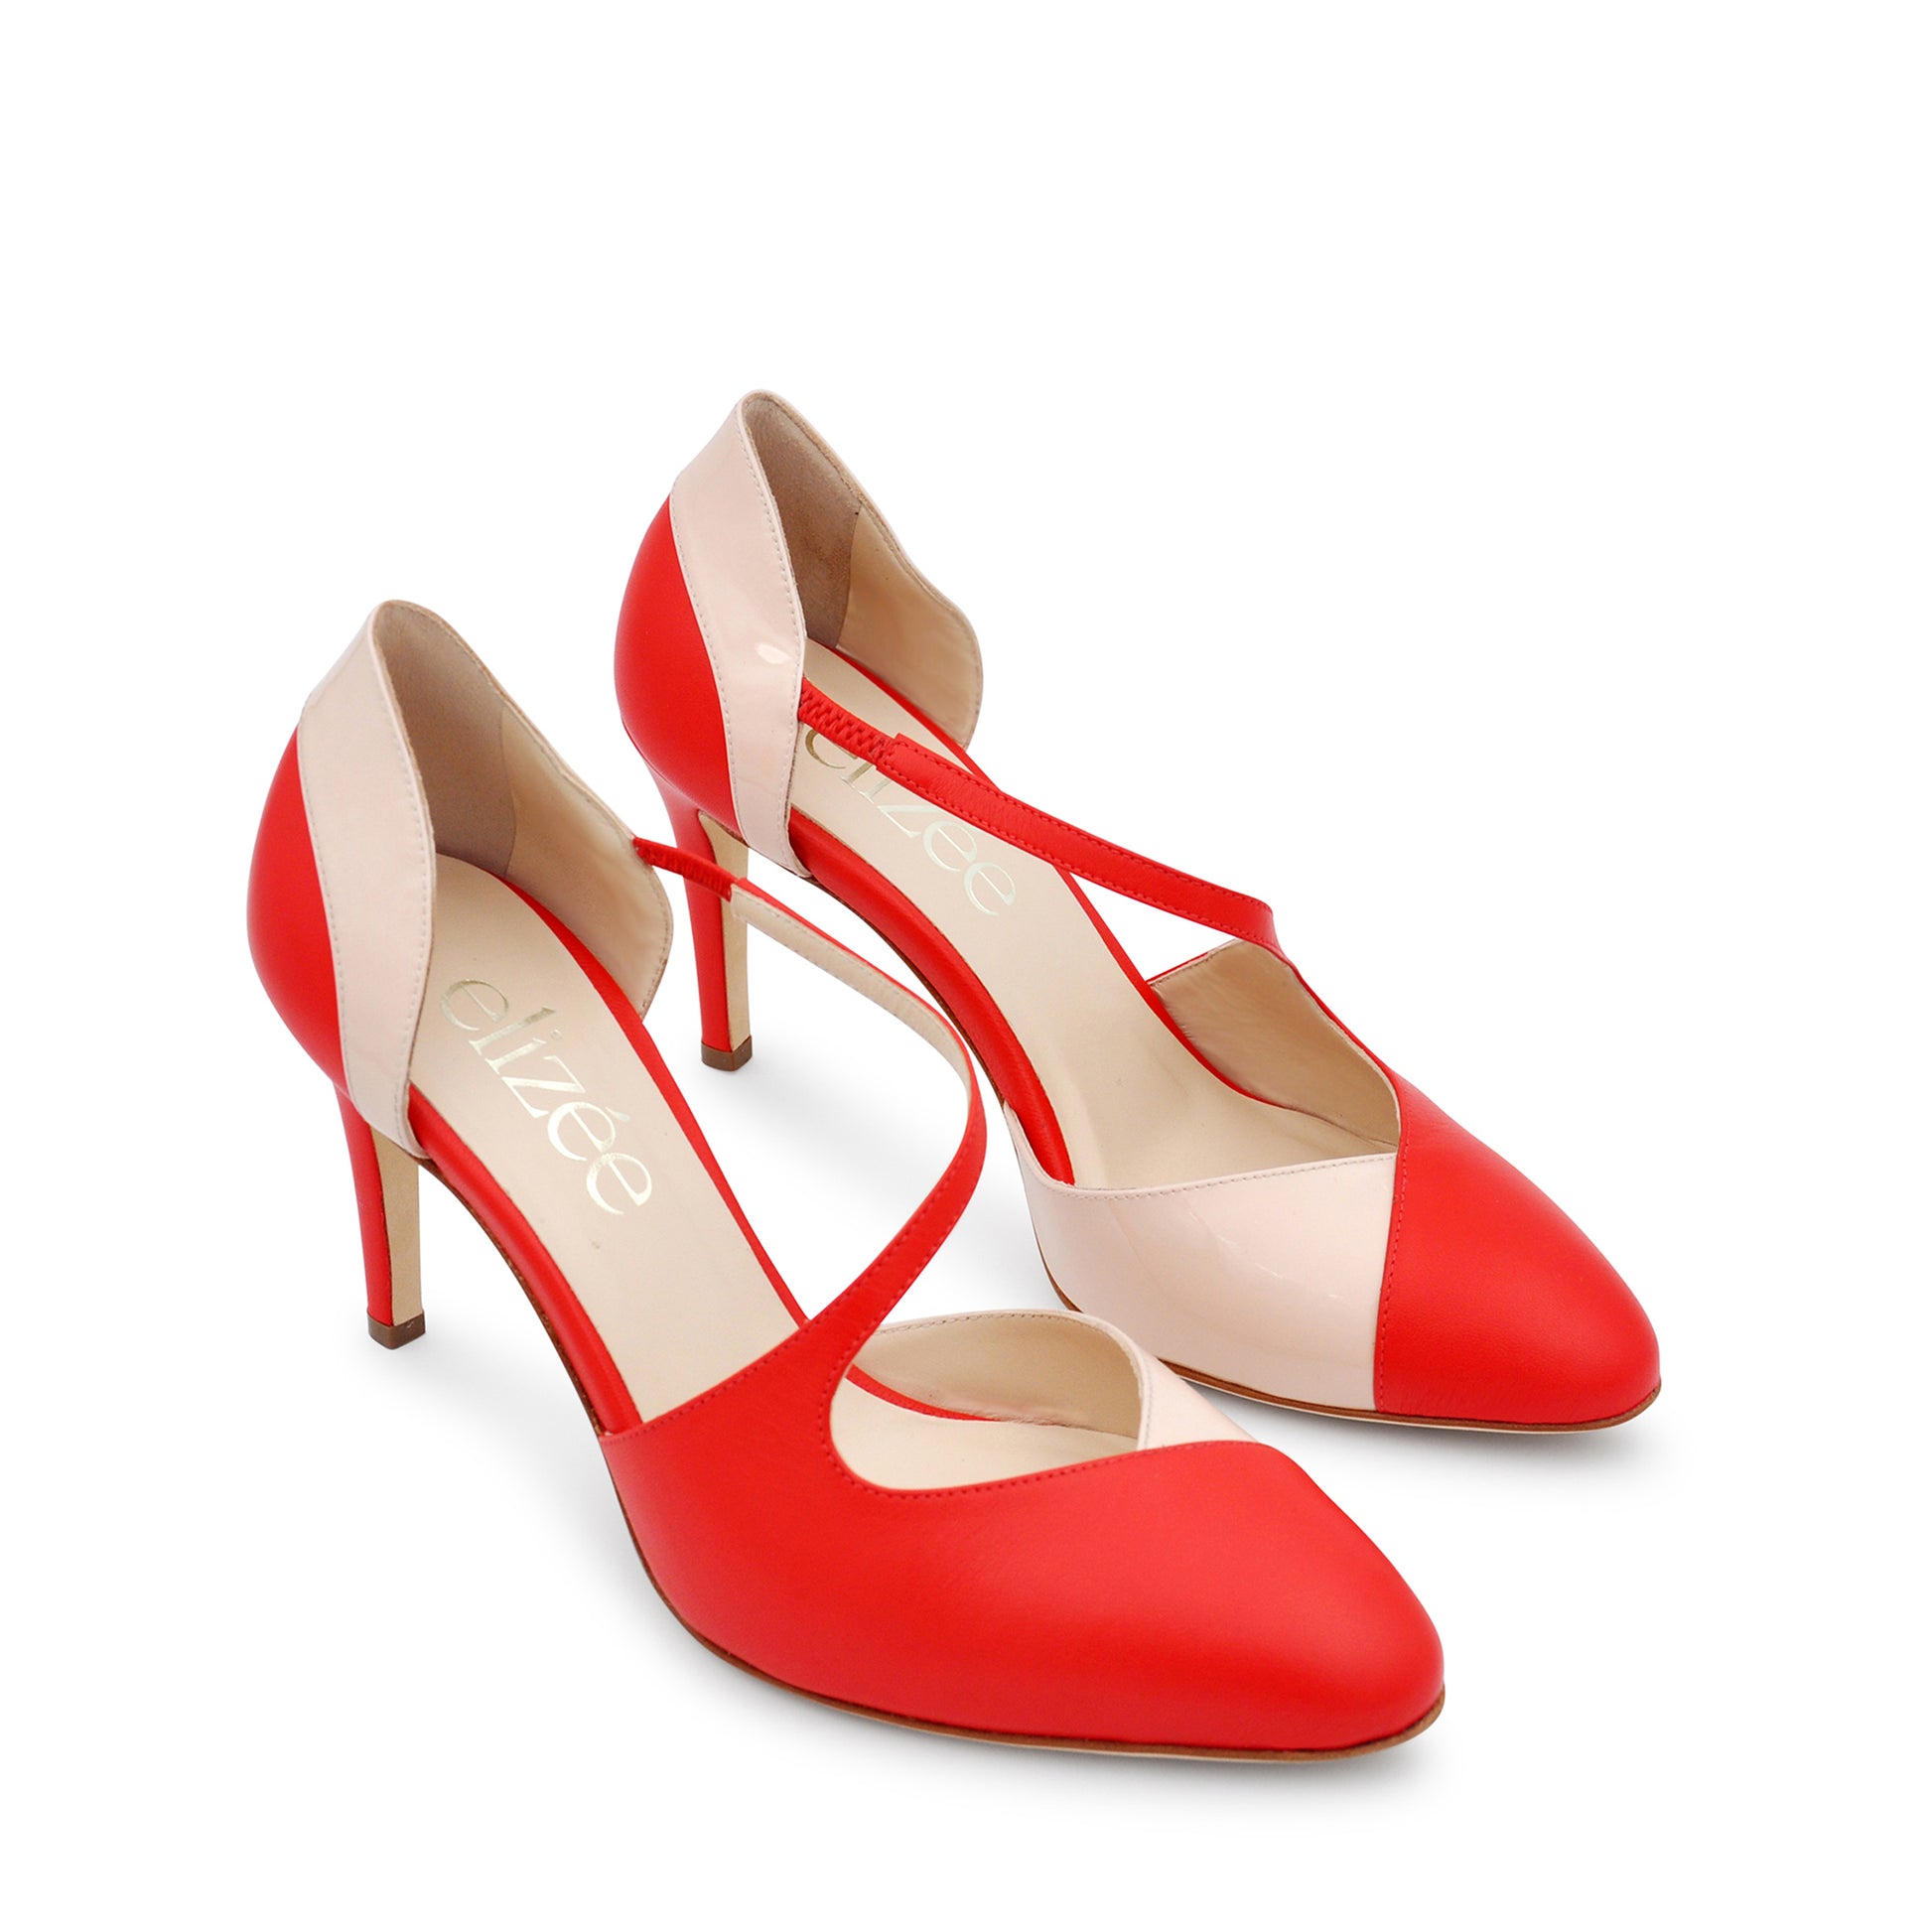 The Elba Pump - Crimson and Blush Leather High Heels